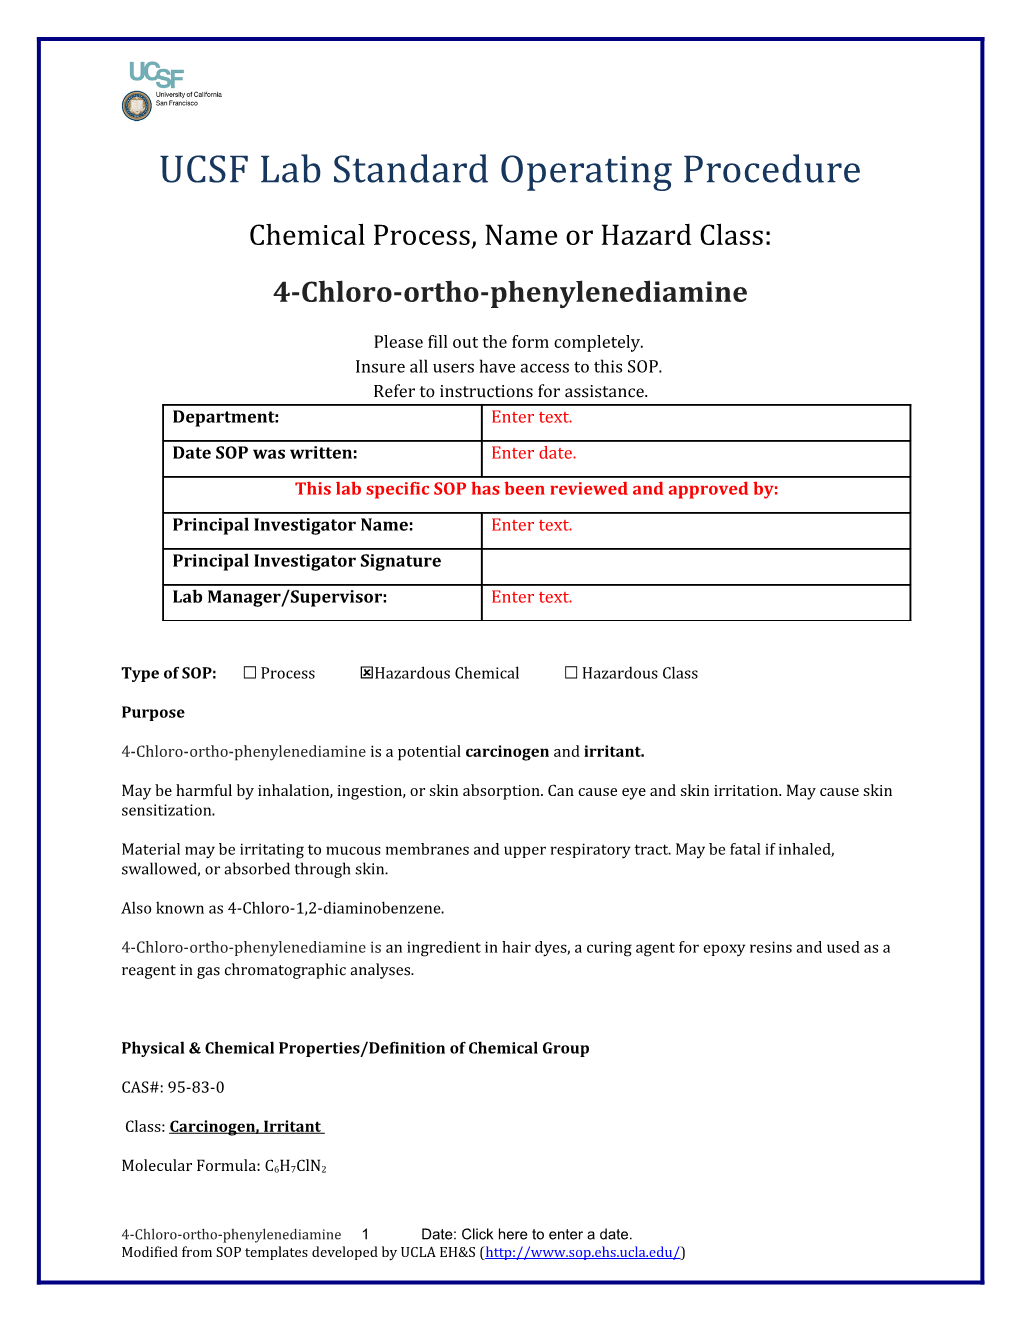 UCSF Lab Standard Operating Procedure s12